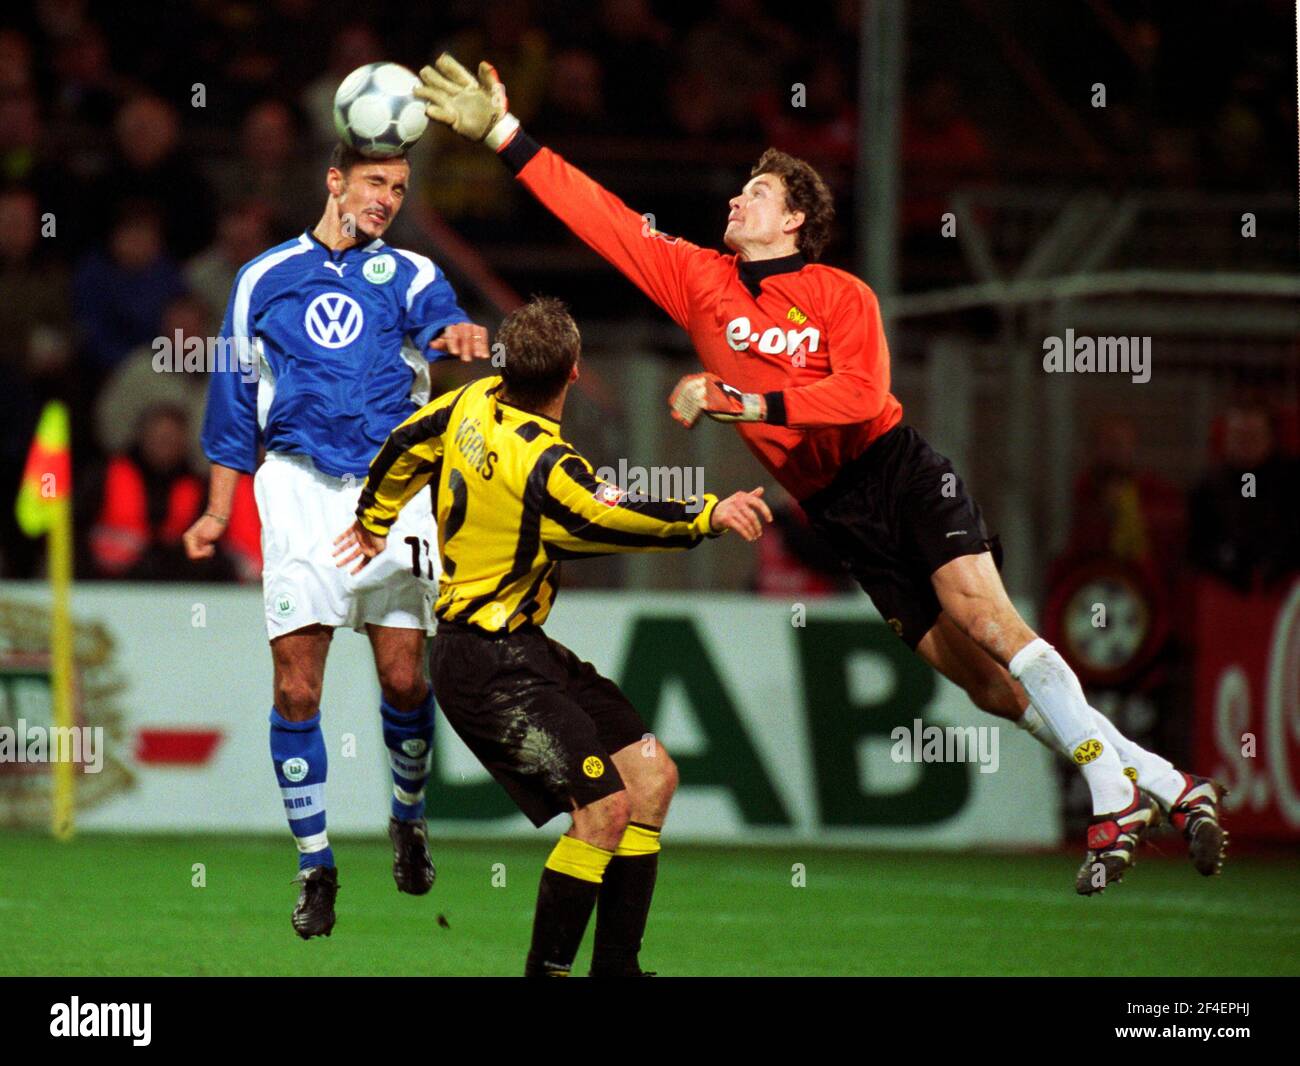 Dortmund, Germany 25.11.2000, Football:  Bundesliga season 2000/01, Borussia Dortmund (BVB, yellow) vs VfL Wolfsburg (VFL, blue) 2:1 (blue) 2:0 - from left: Tomislav MARIC (VFL), Christian WOERNS (BVB), Jens LEHMANN (BVB), Stock Photo